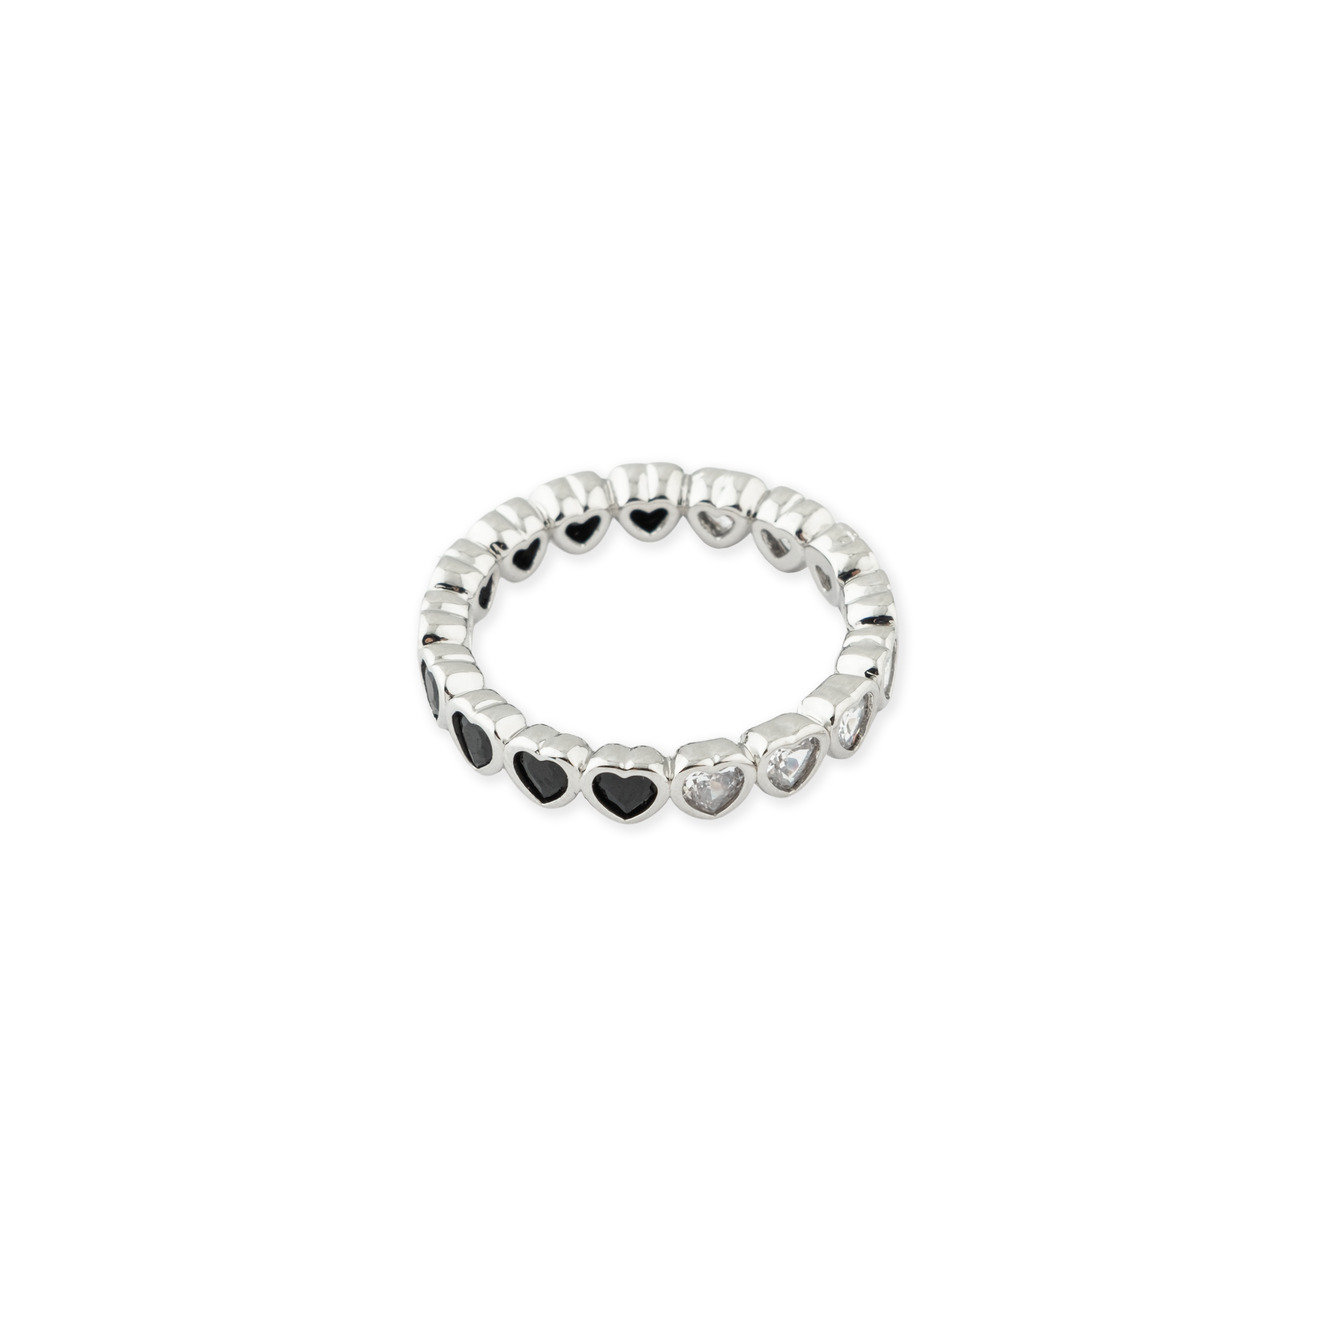 Herald Percy Серебристое кольцо из сердец с белыми и черными кристаллами herald percy серебристое колье с кристаллами в виде бабочки